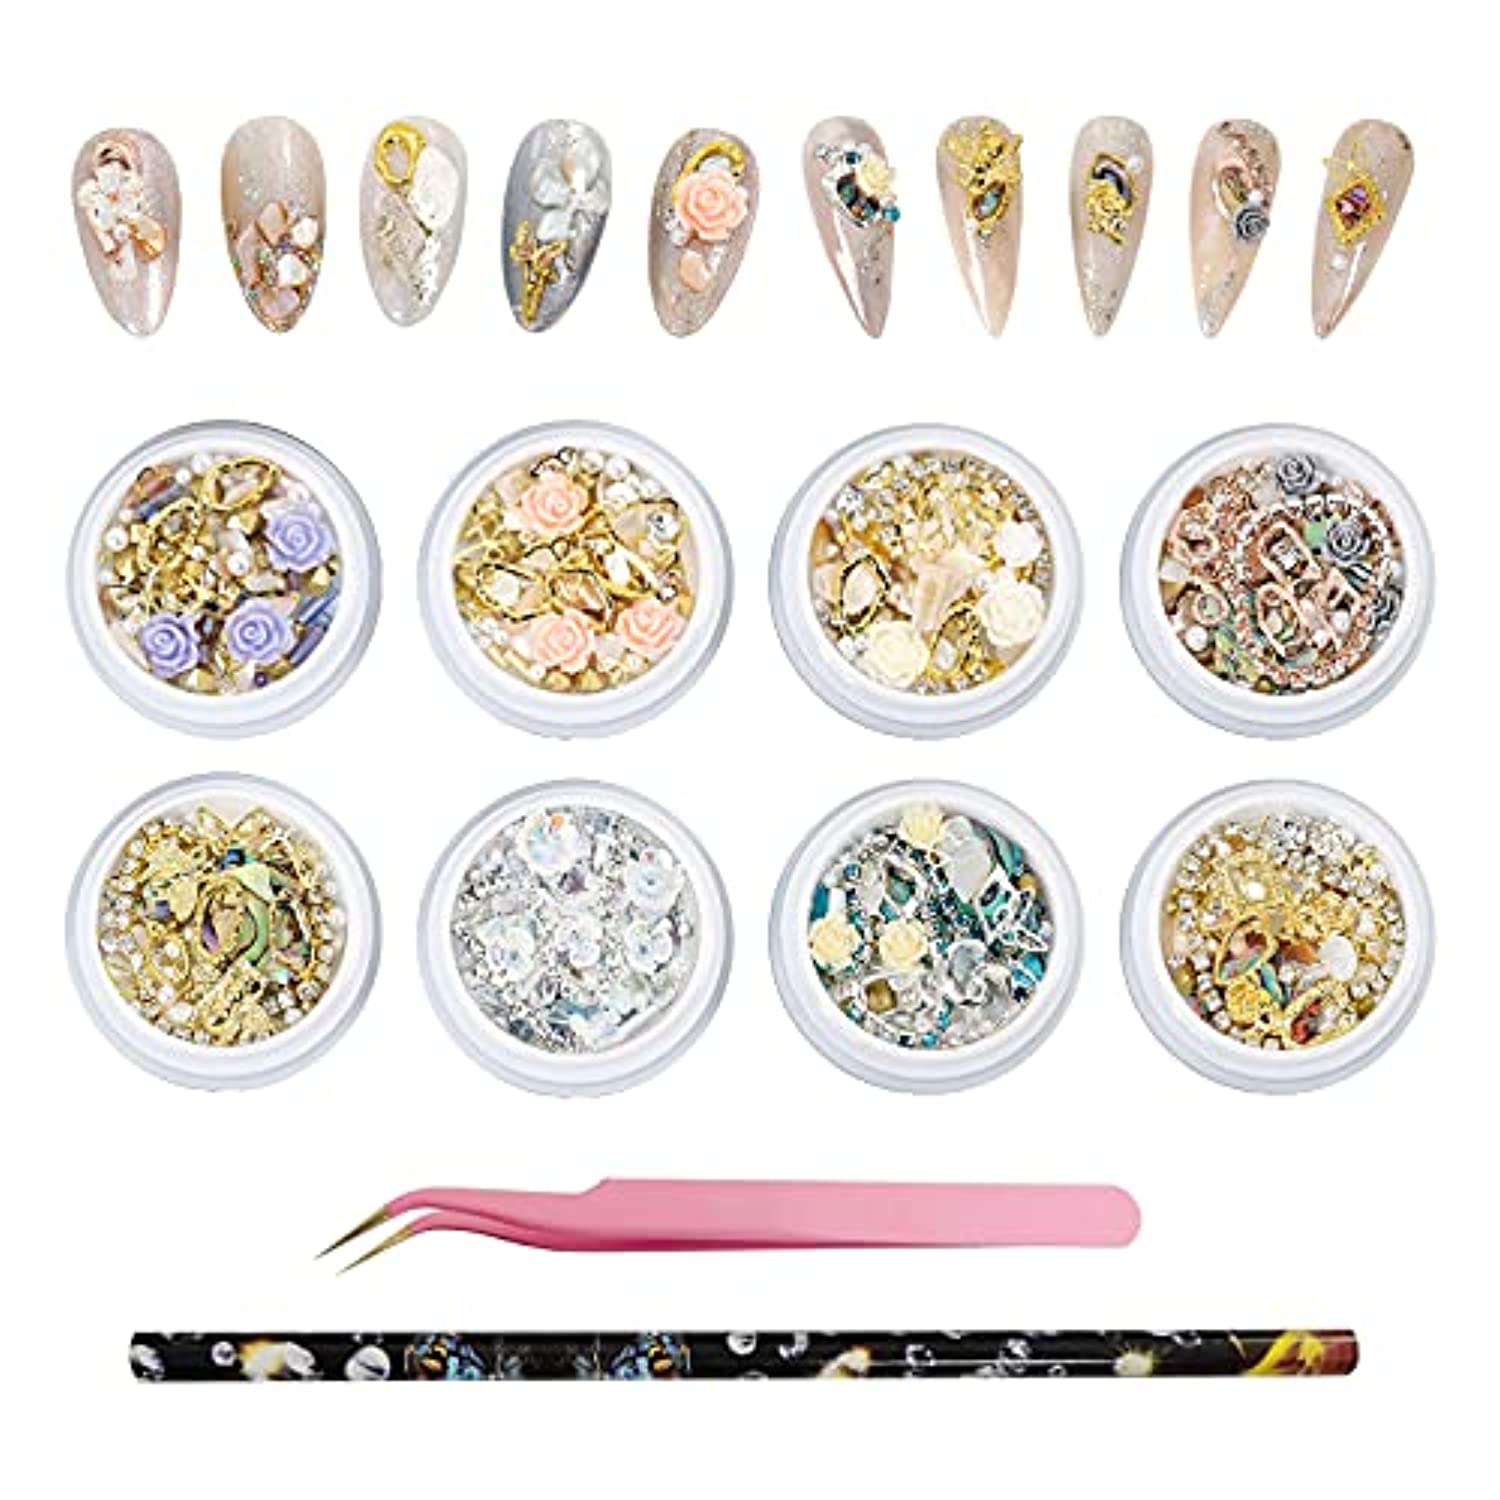 Nail art rhinestone diamond glass crystal pearl flower gemstone gemstone butterfly mason chain mixed color DIY design for nail art decoration.(8 boxes)